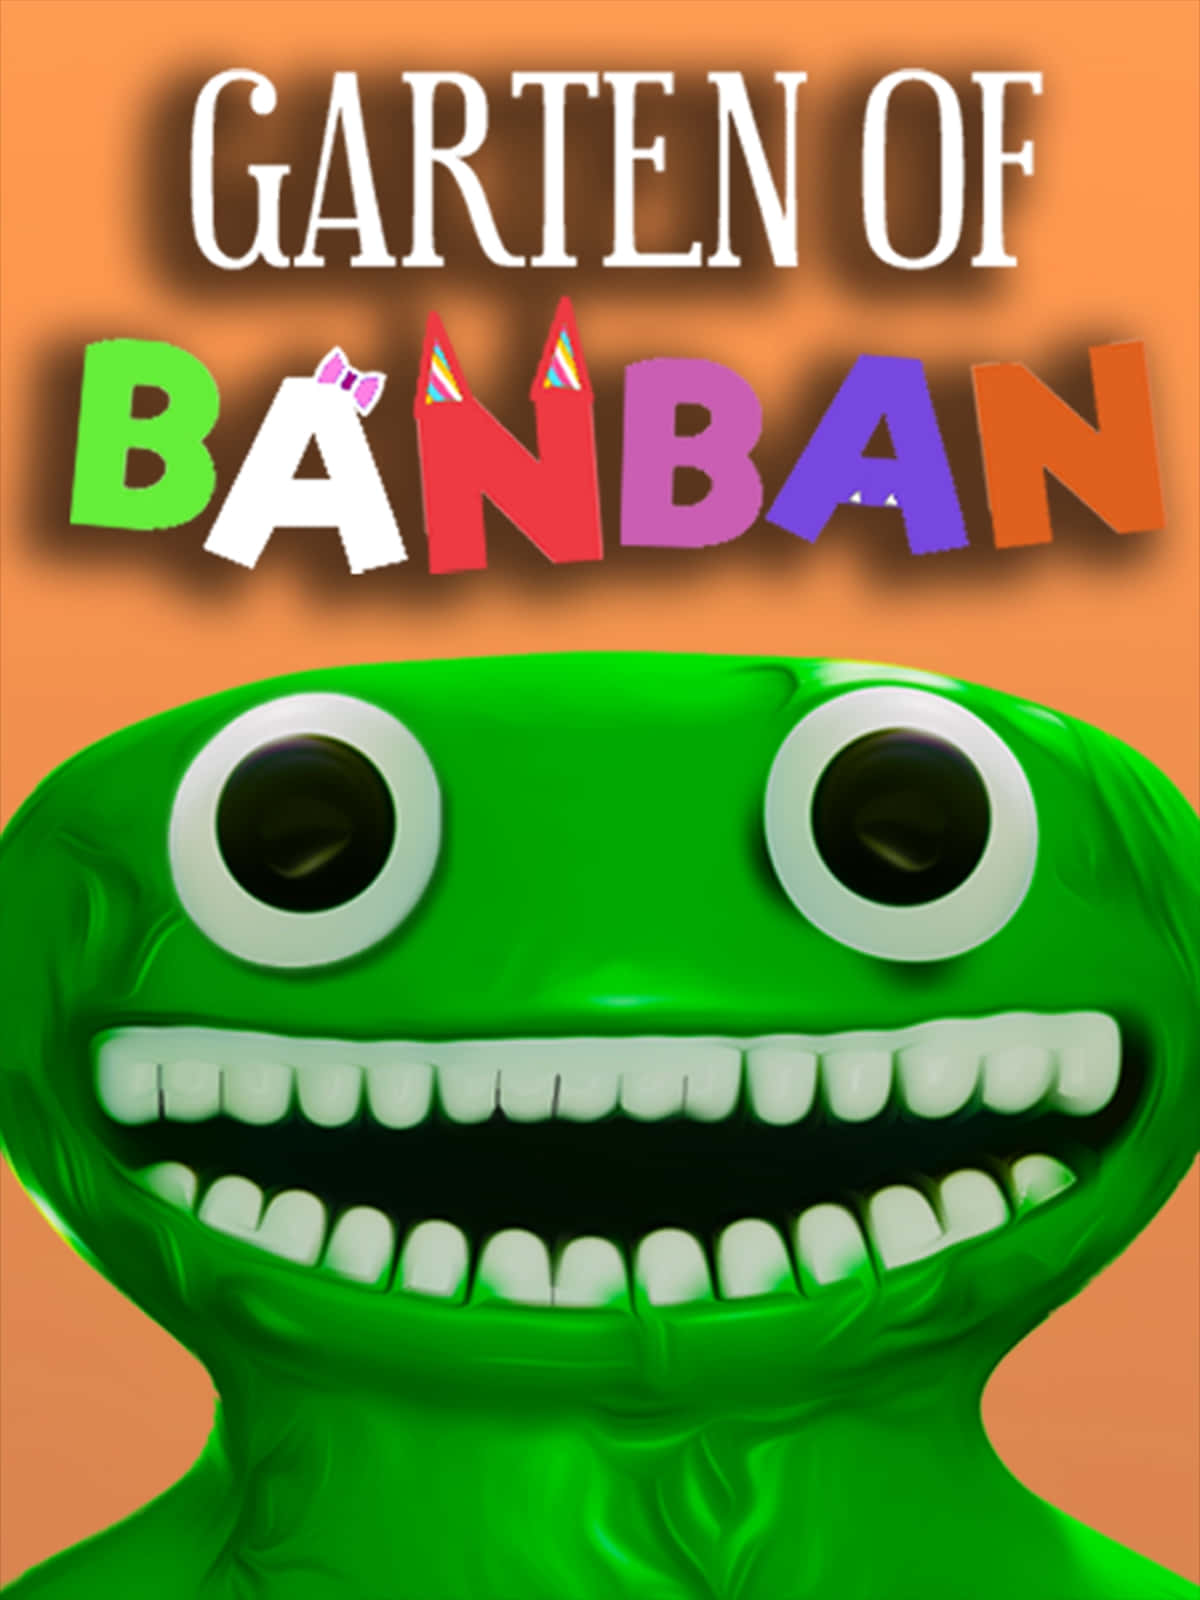 Gartenof Banban Game Cover Art Wallpaper